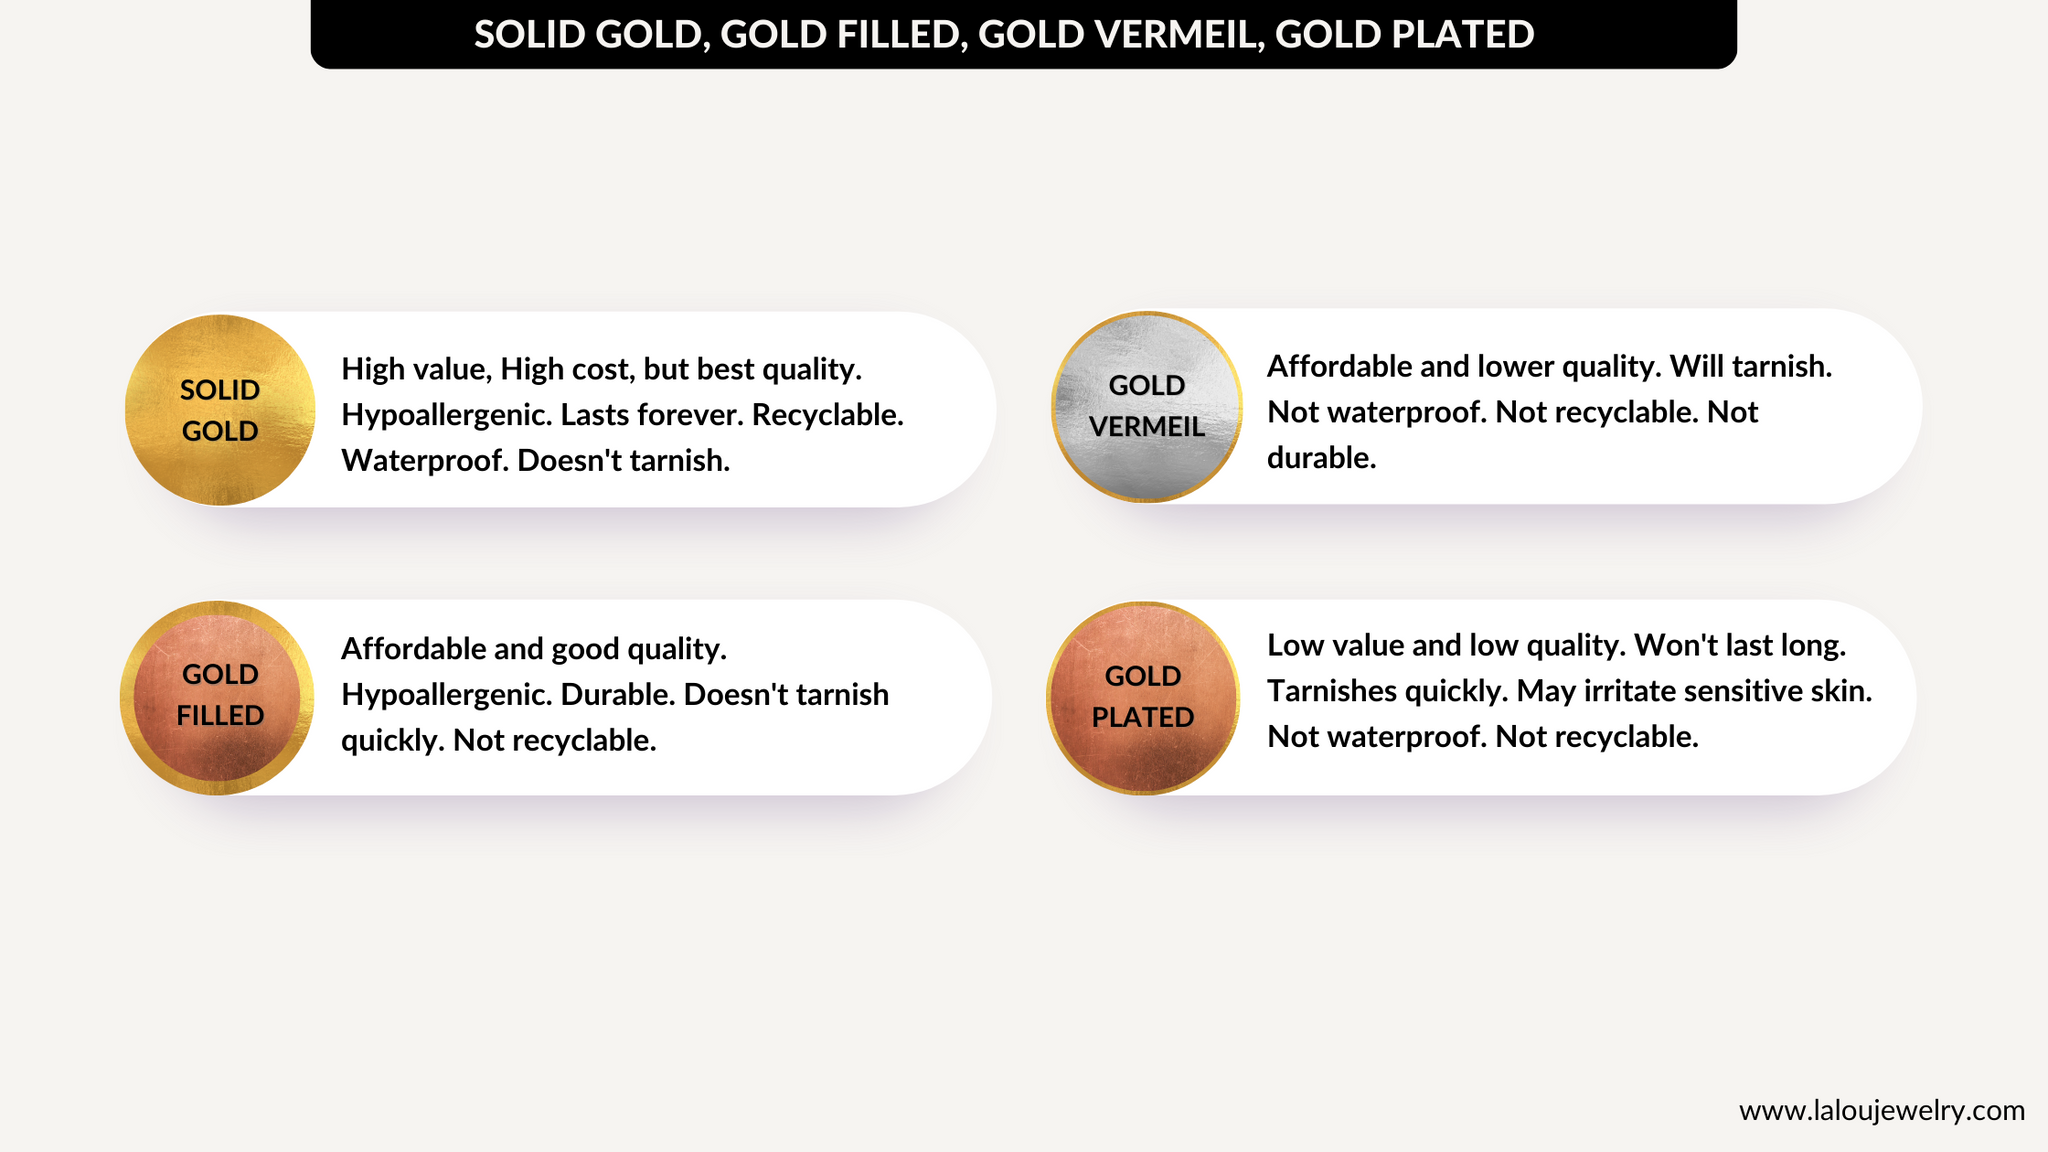 Vermeil, Gold filled, solid gold